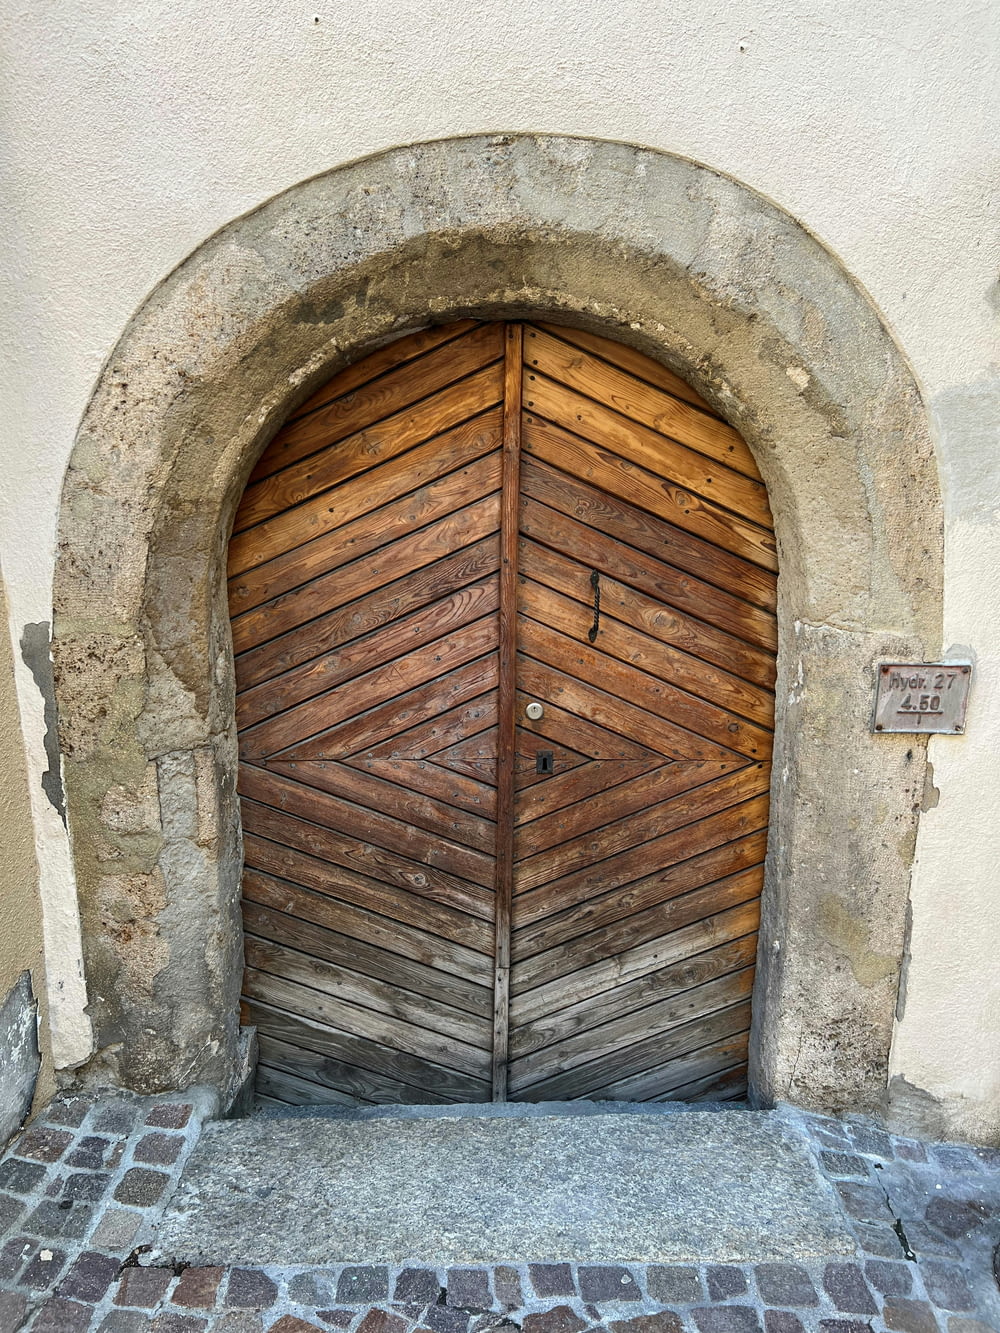 a wooden door in a stone building